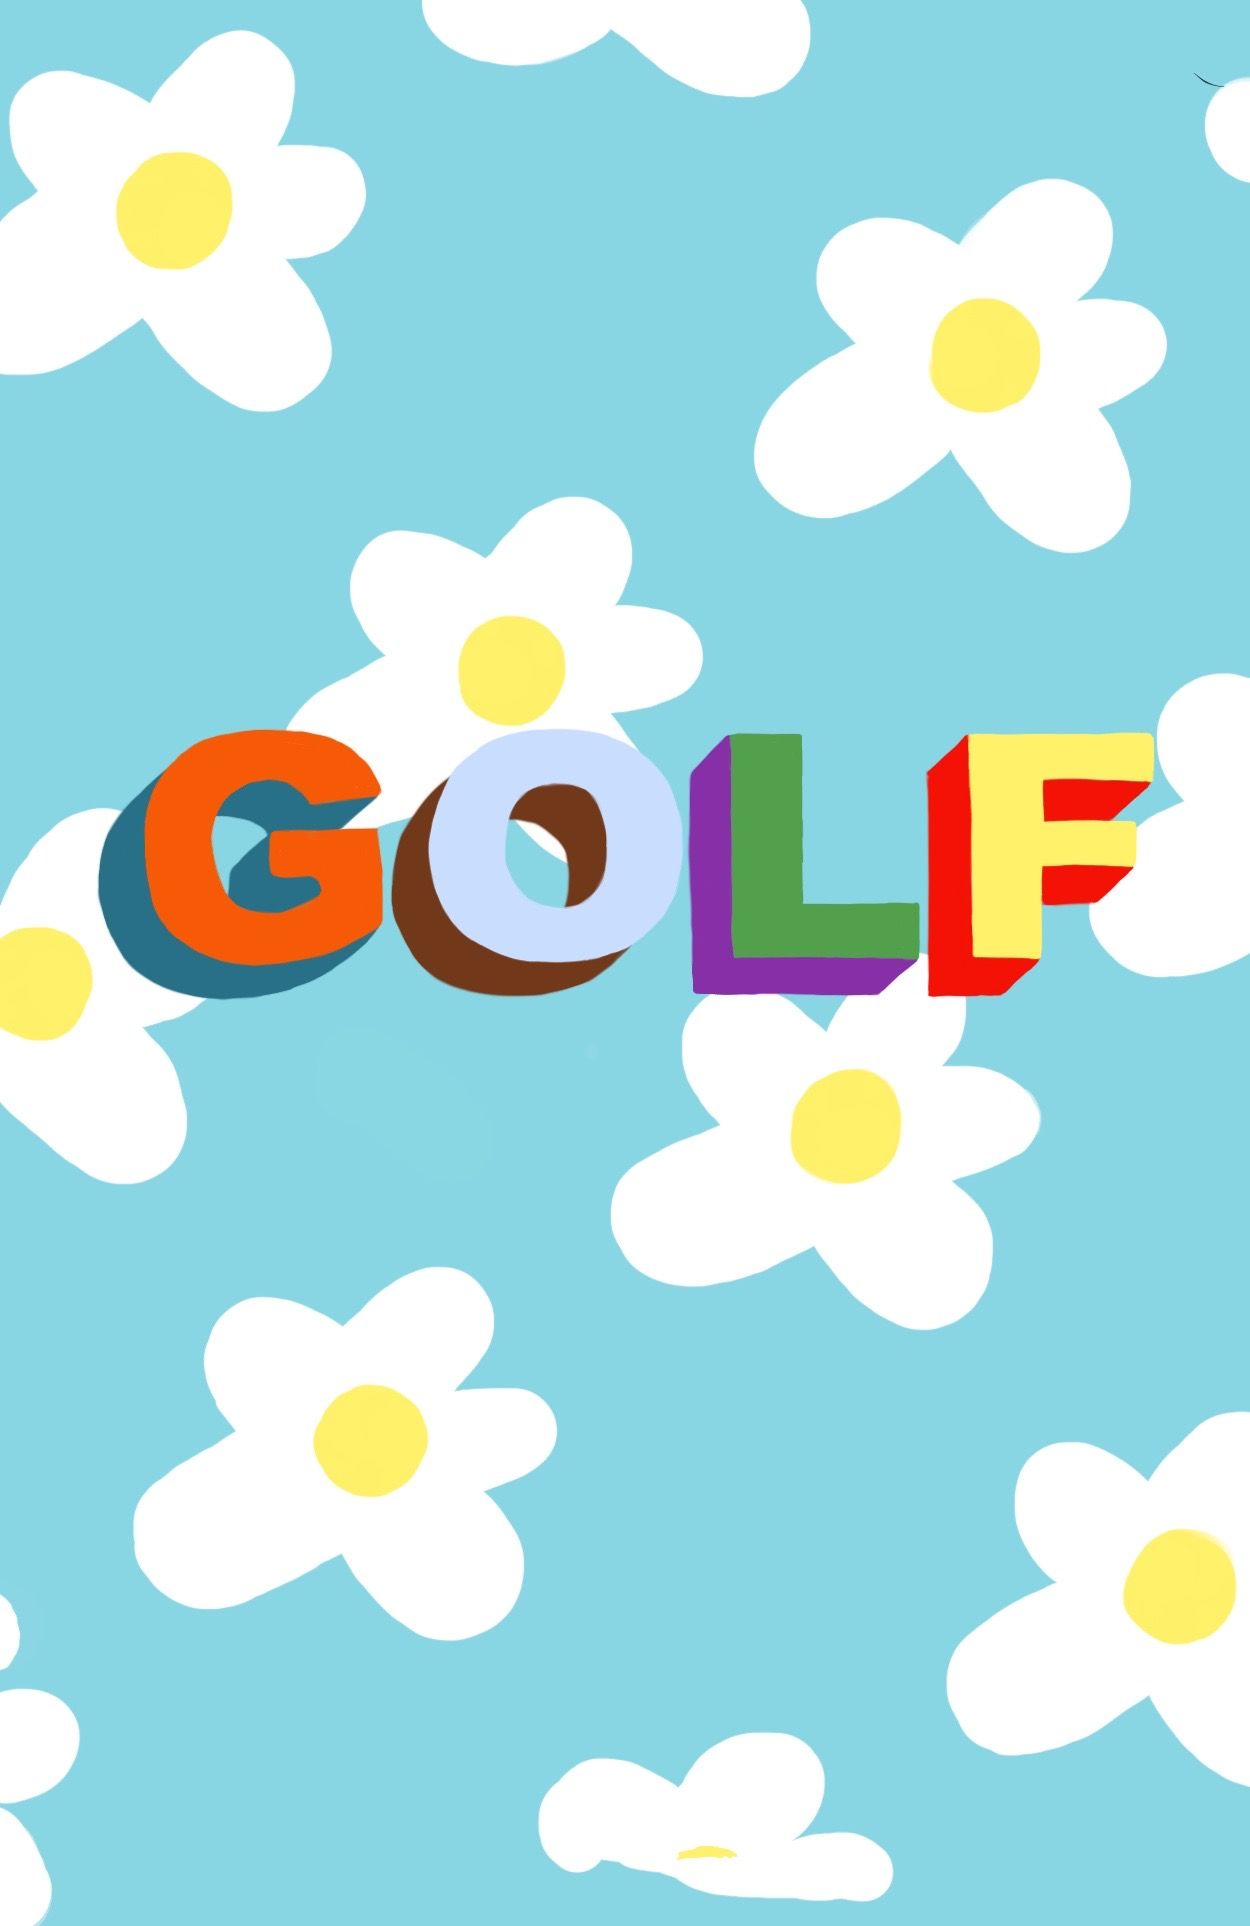 Golf Wang Wallpapers